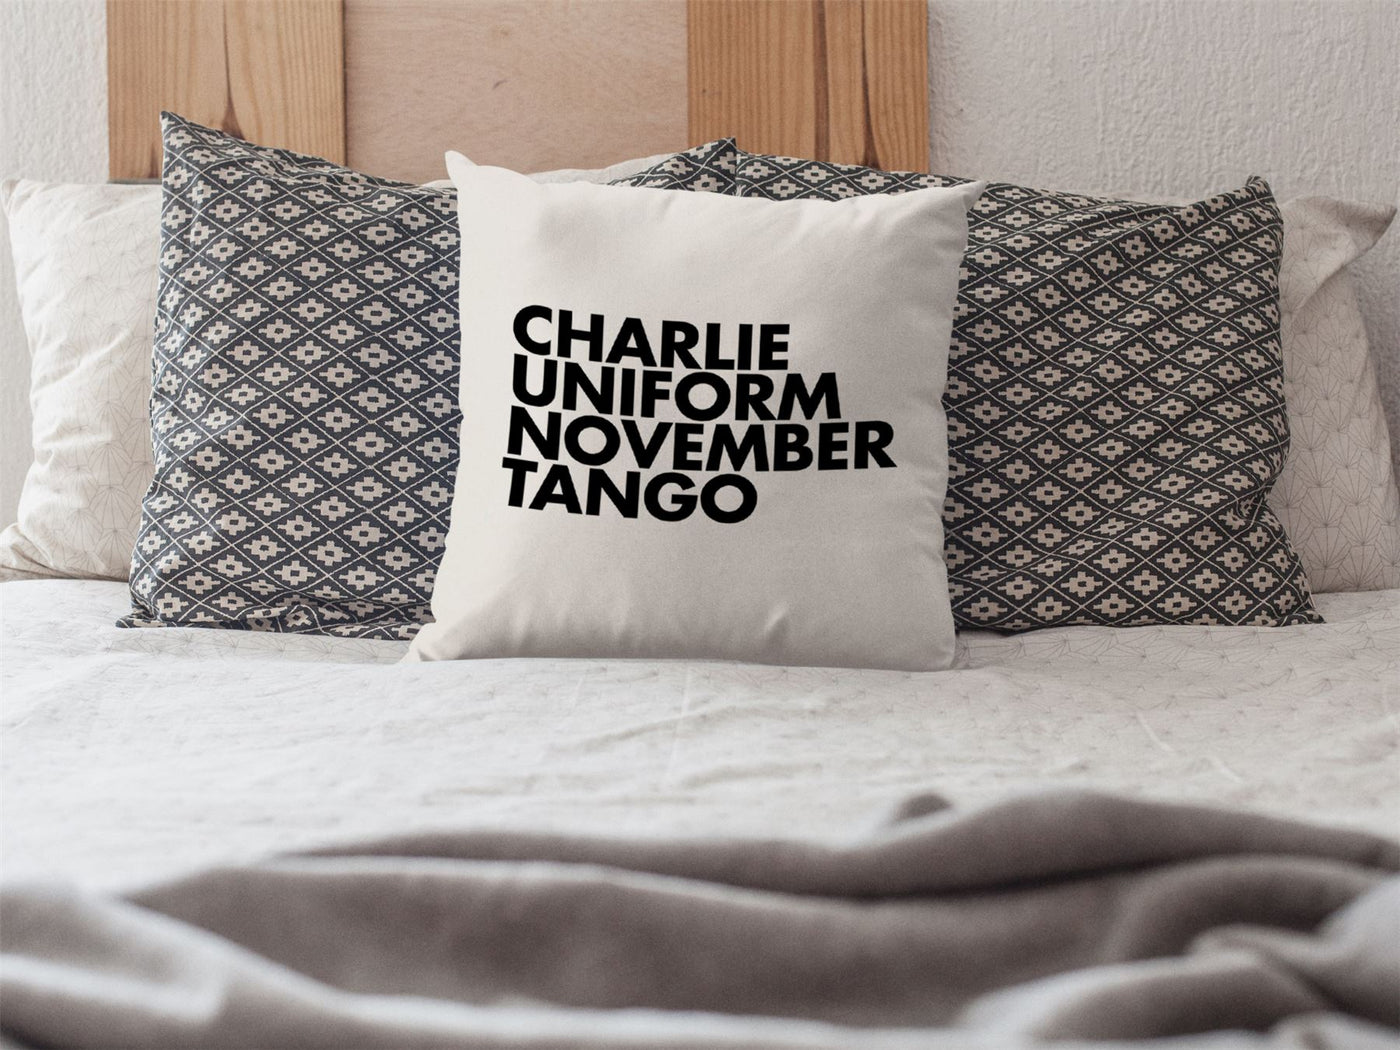 Charlie Uniform November Tango Cushion Cover - Funny NSFW Rude Swear